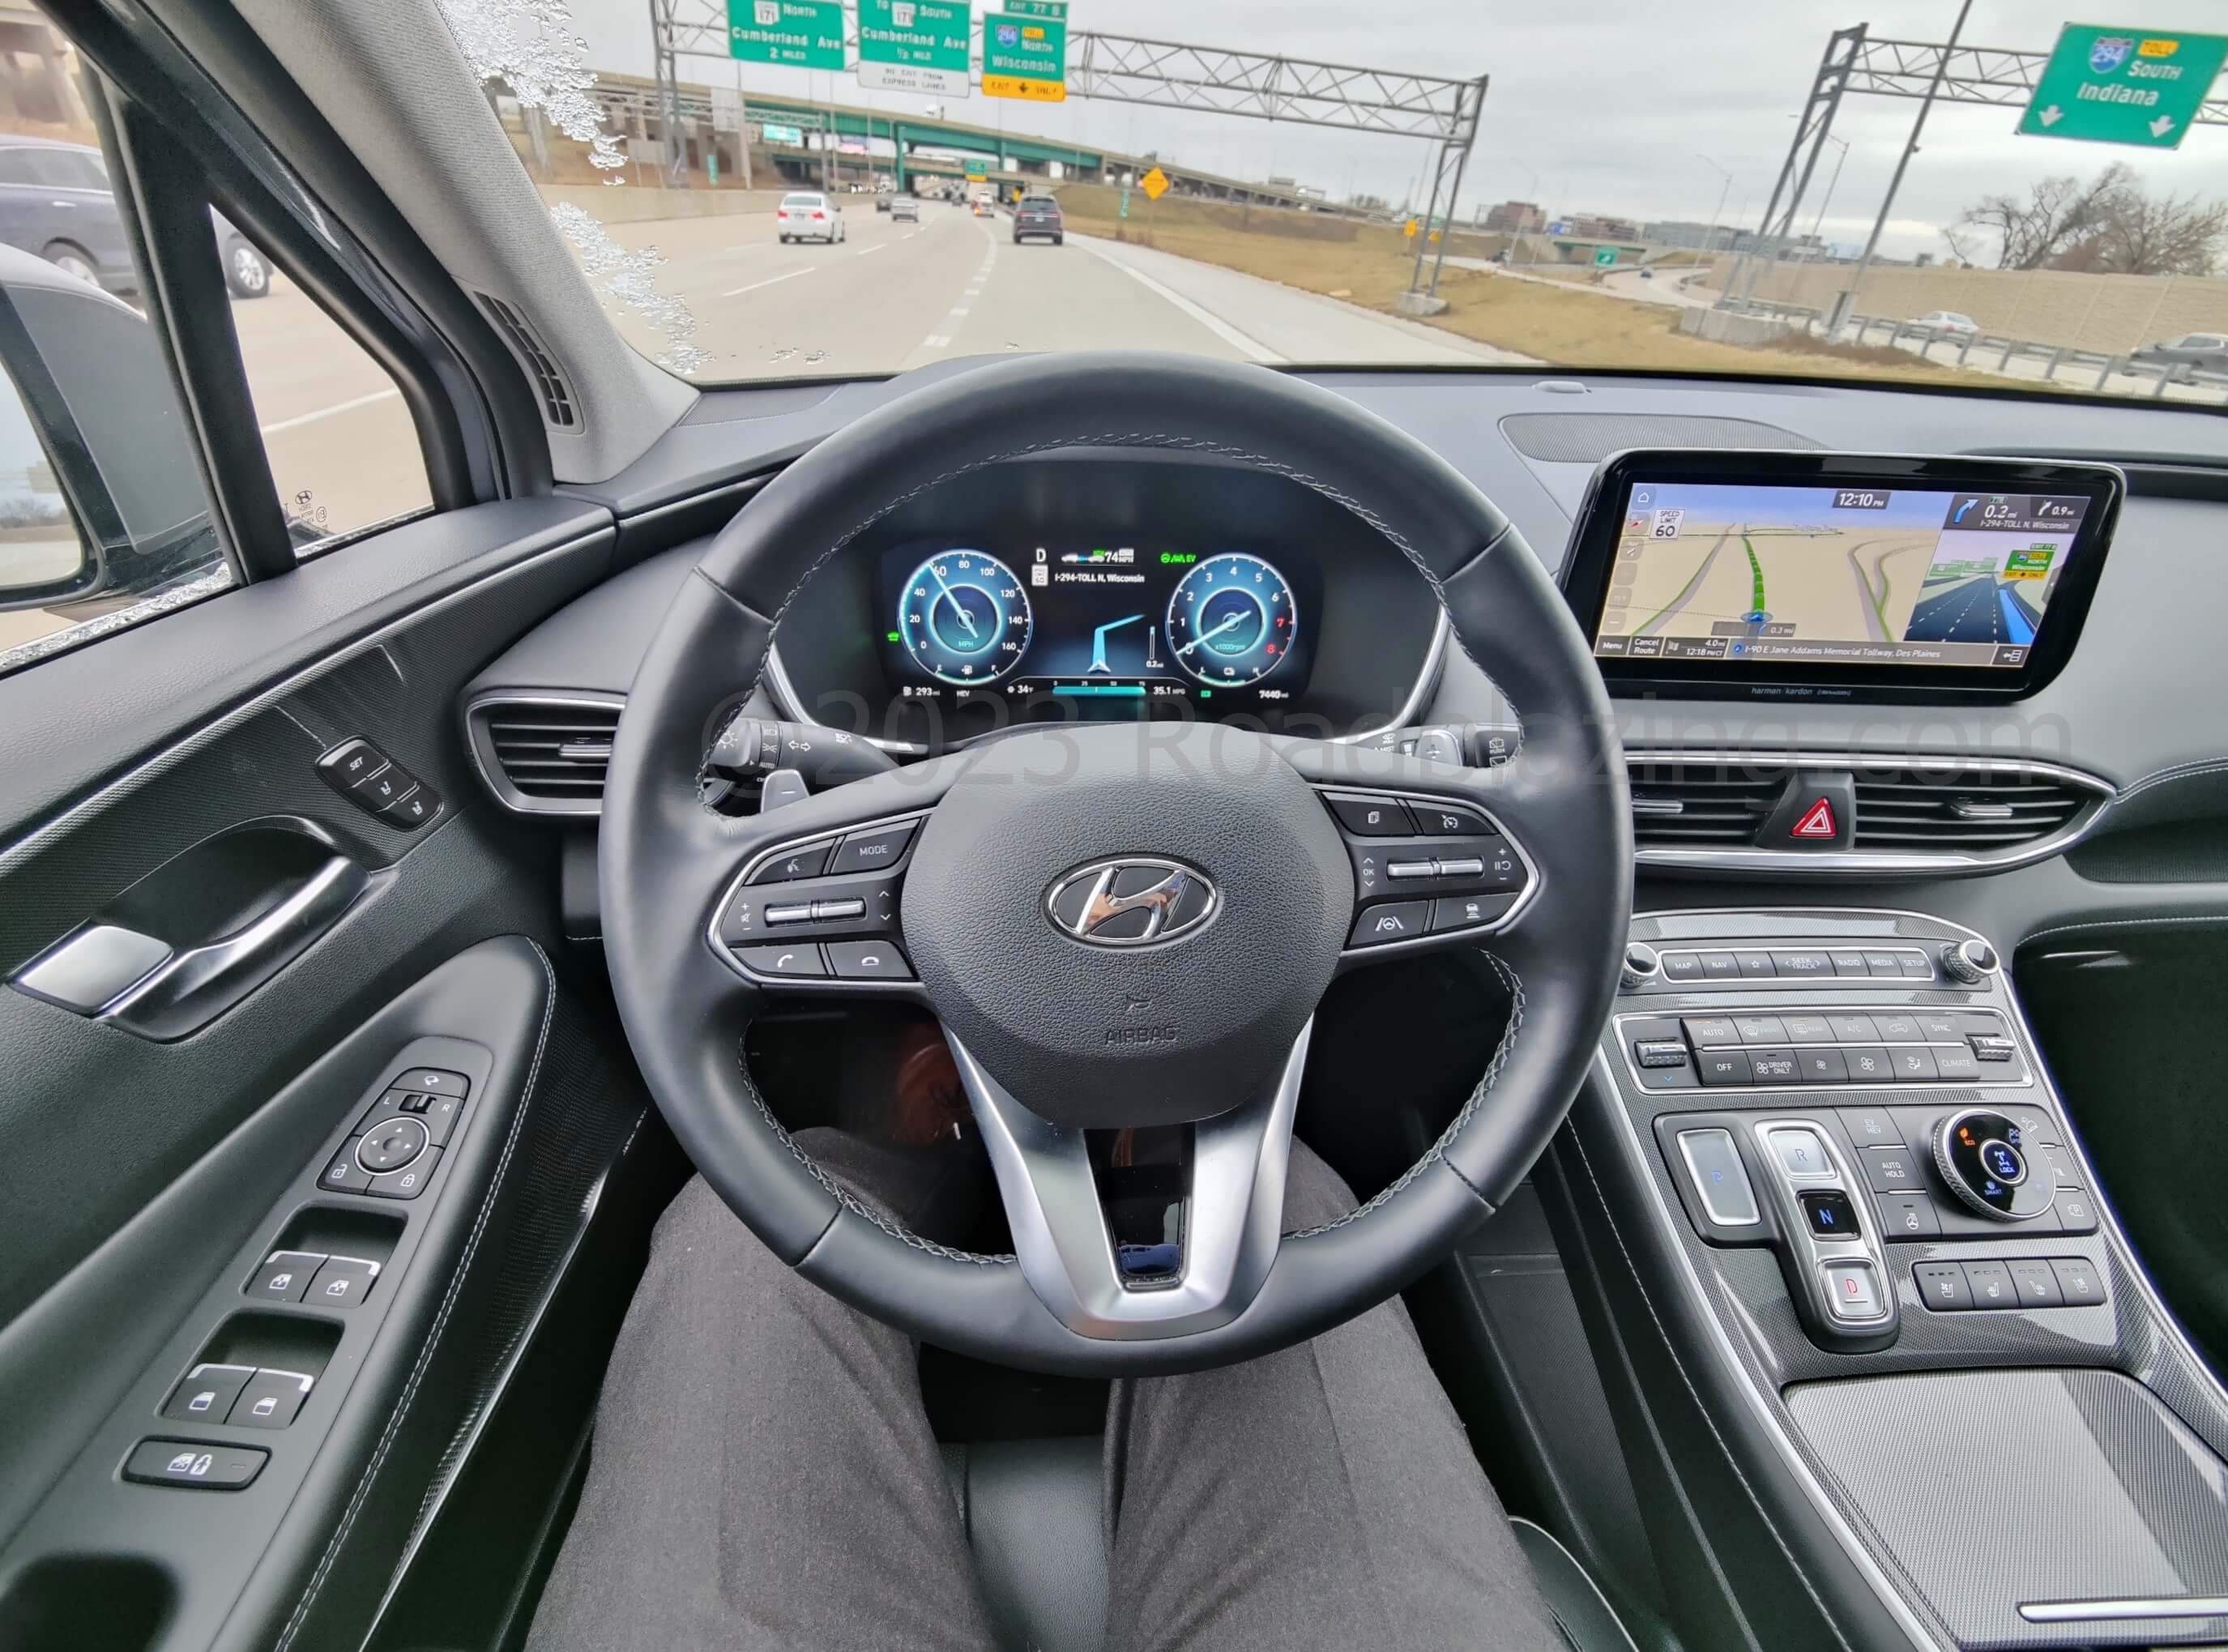 2022 Hyundai Santa Fe Limited PHEV AWD: navigating the interstate w/ turn by turn displays & audio guidance